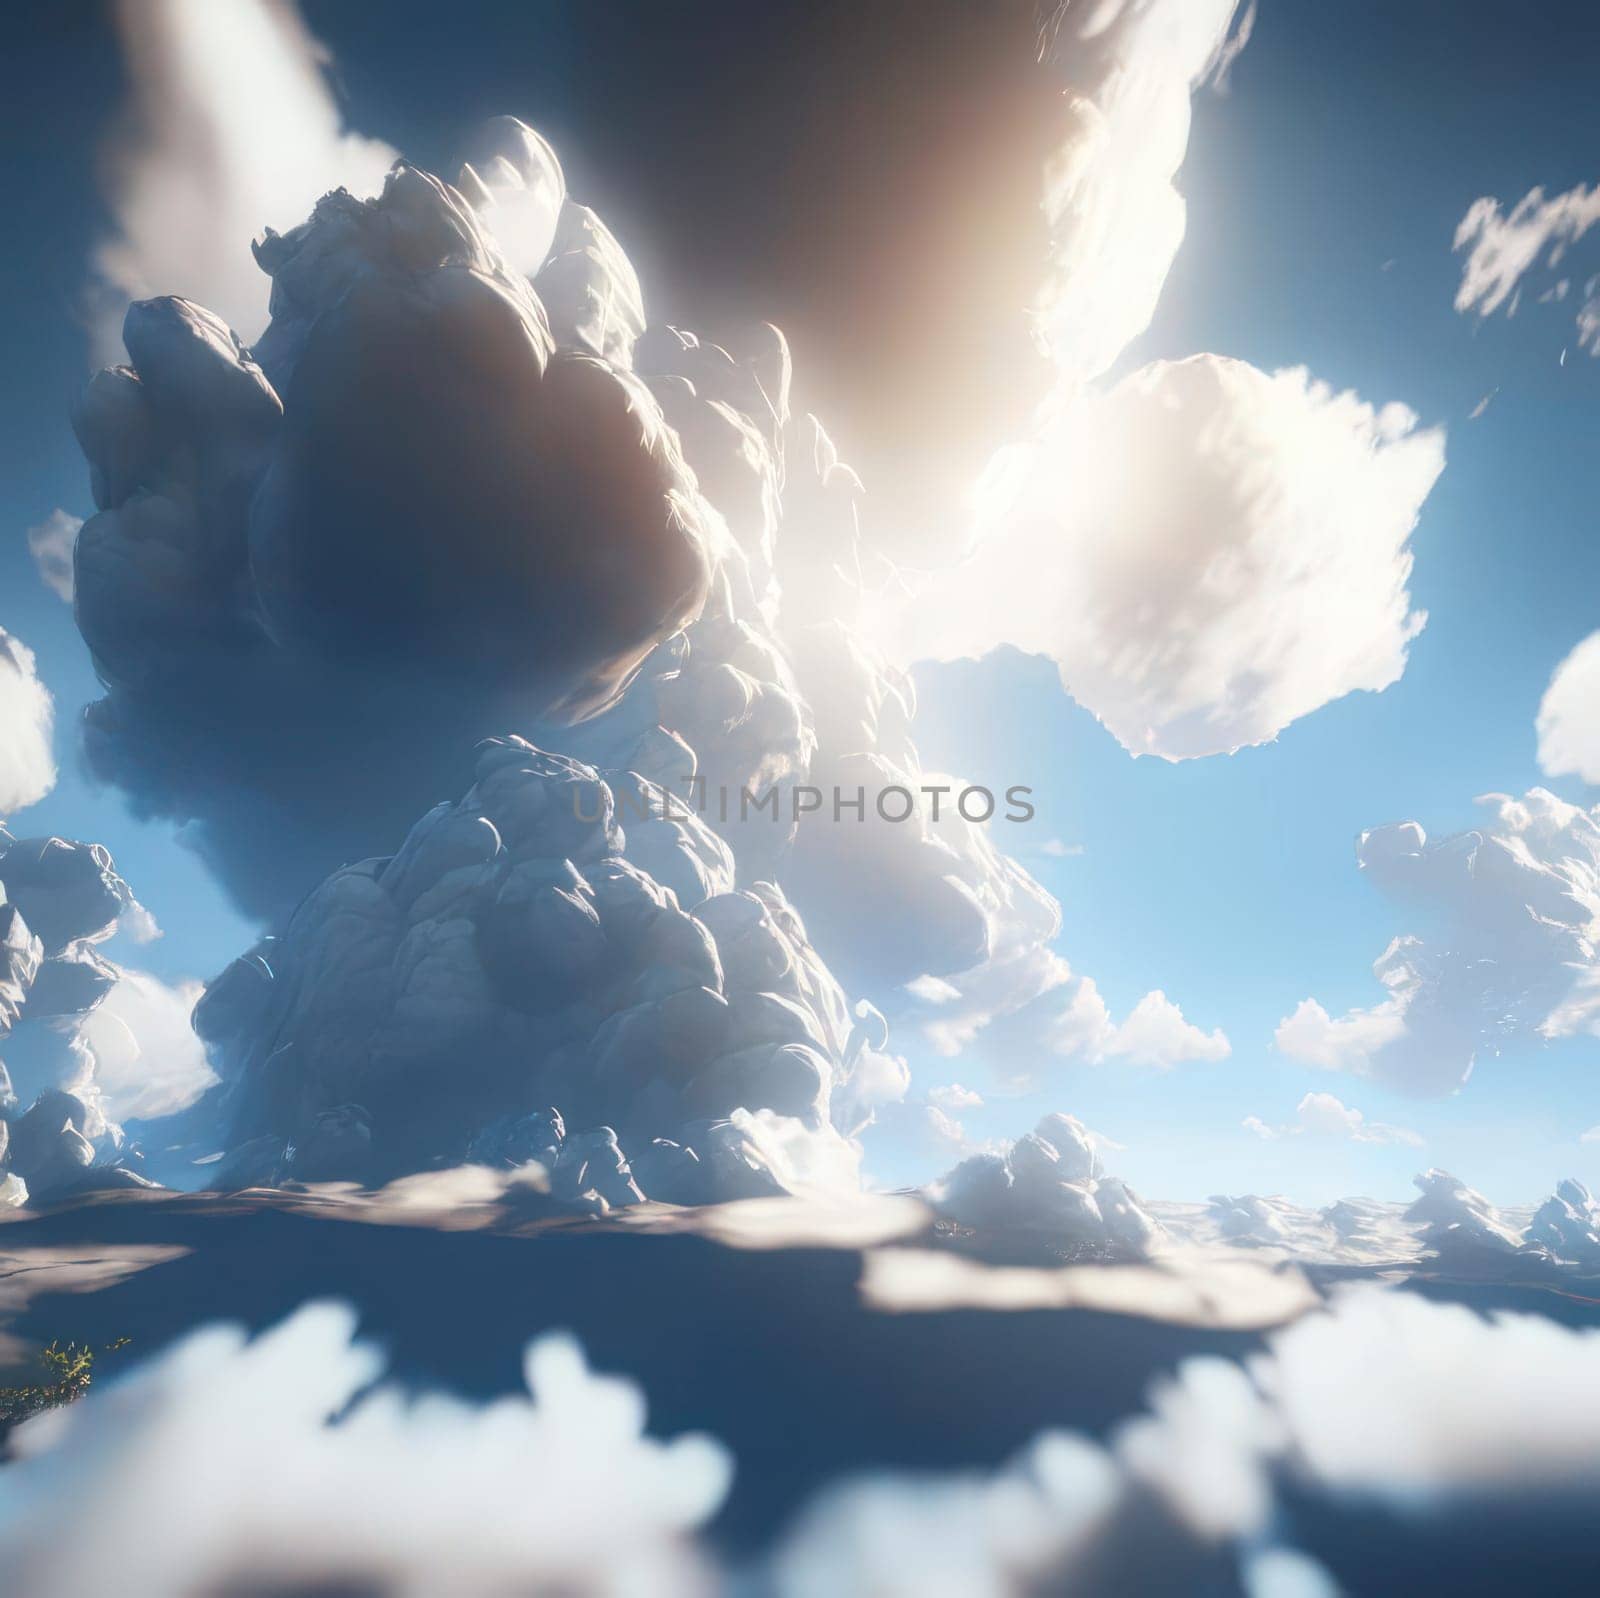 Cloud. Image created by AI